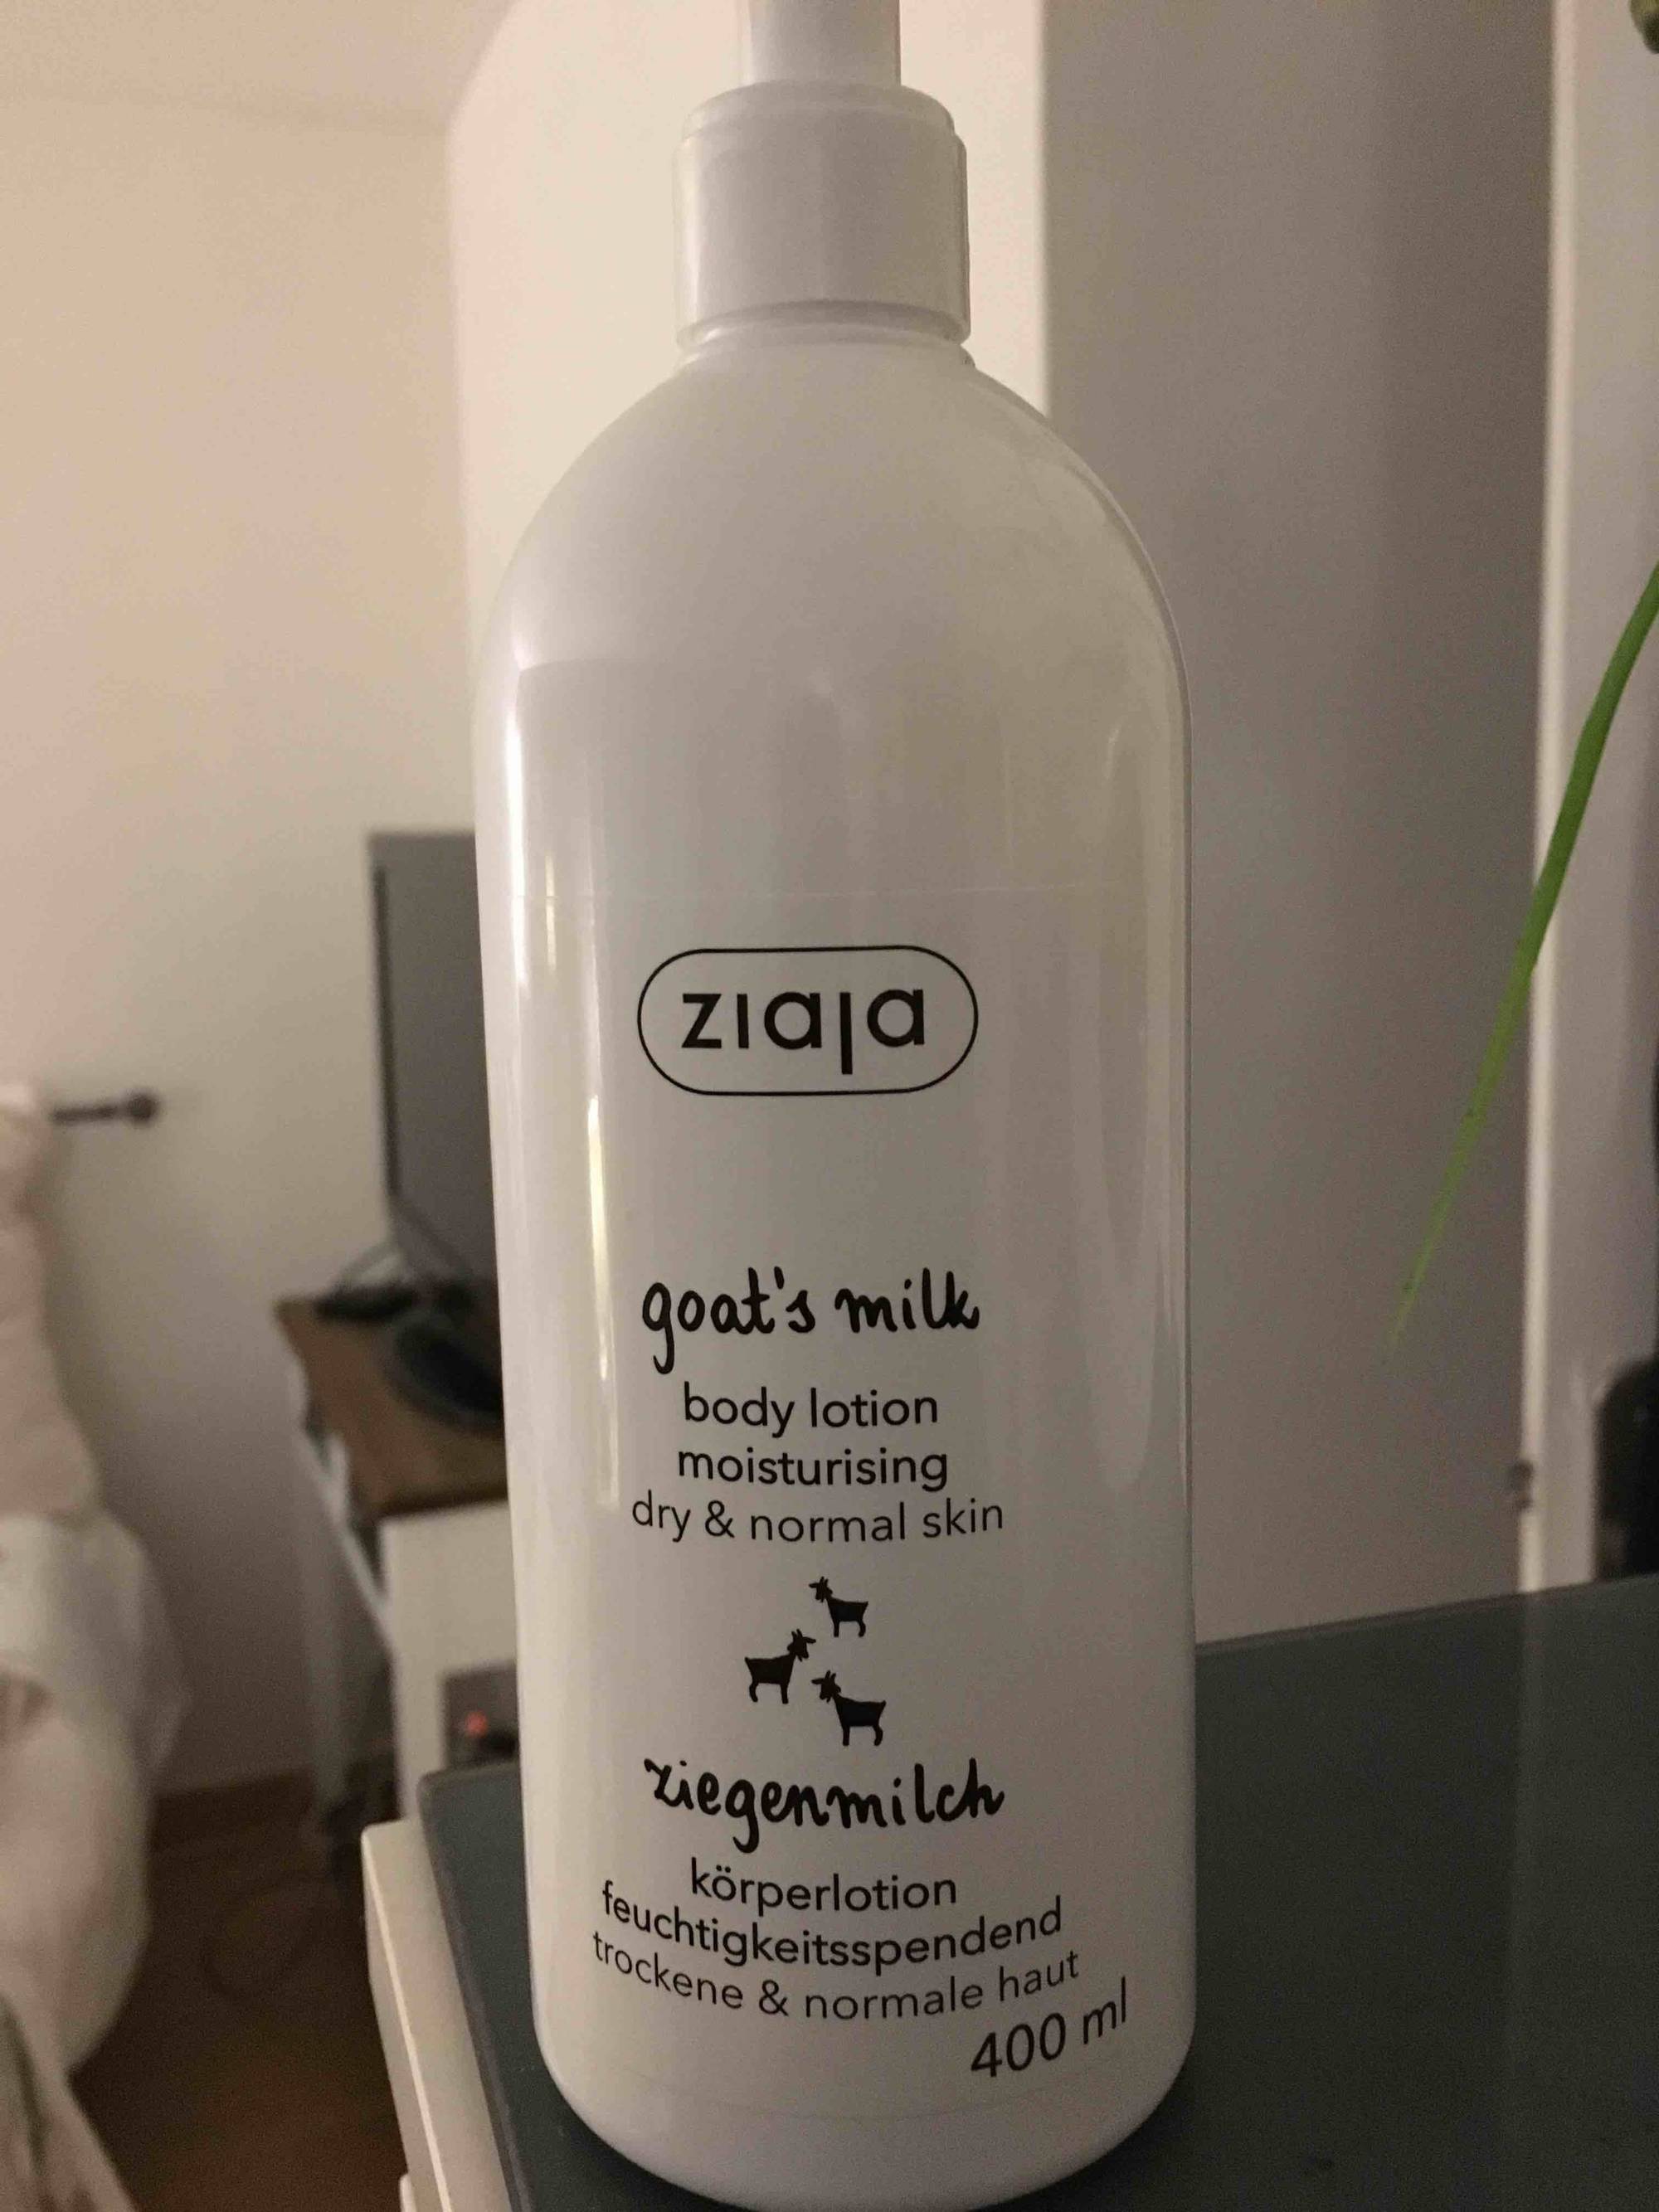 ZIAJA - Goat's milk - Body lotion moisturising